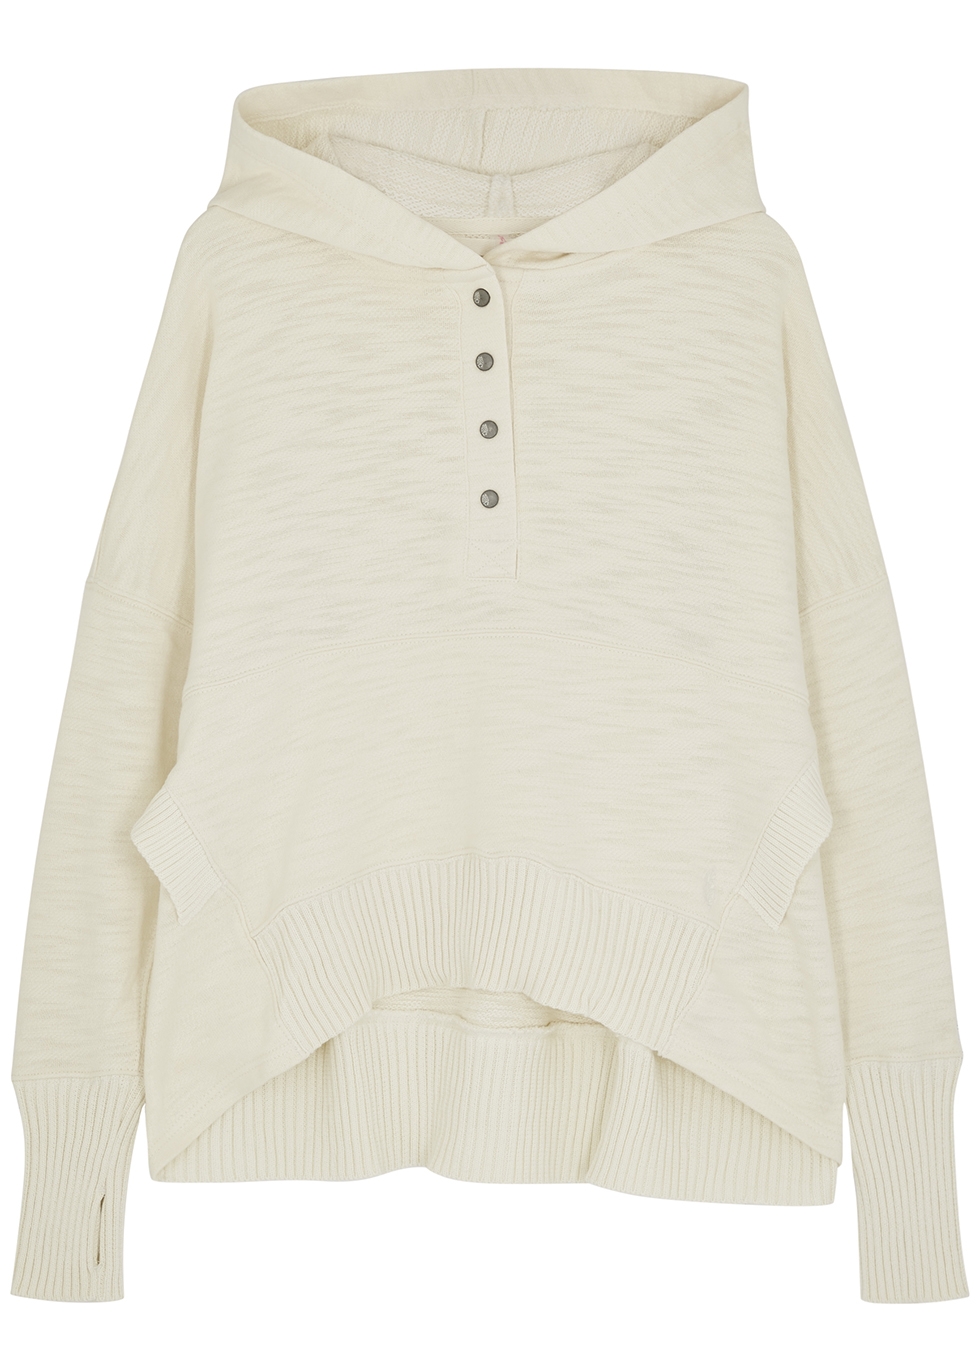 Solid Honey Dove cream hooded cotton sweatshirt